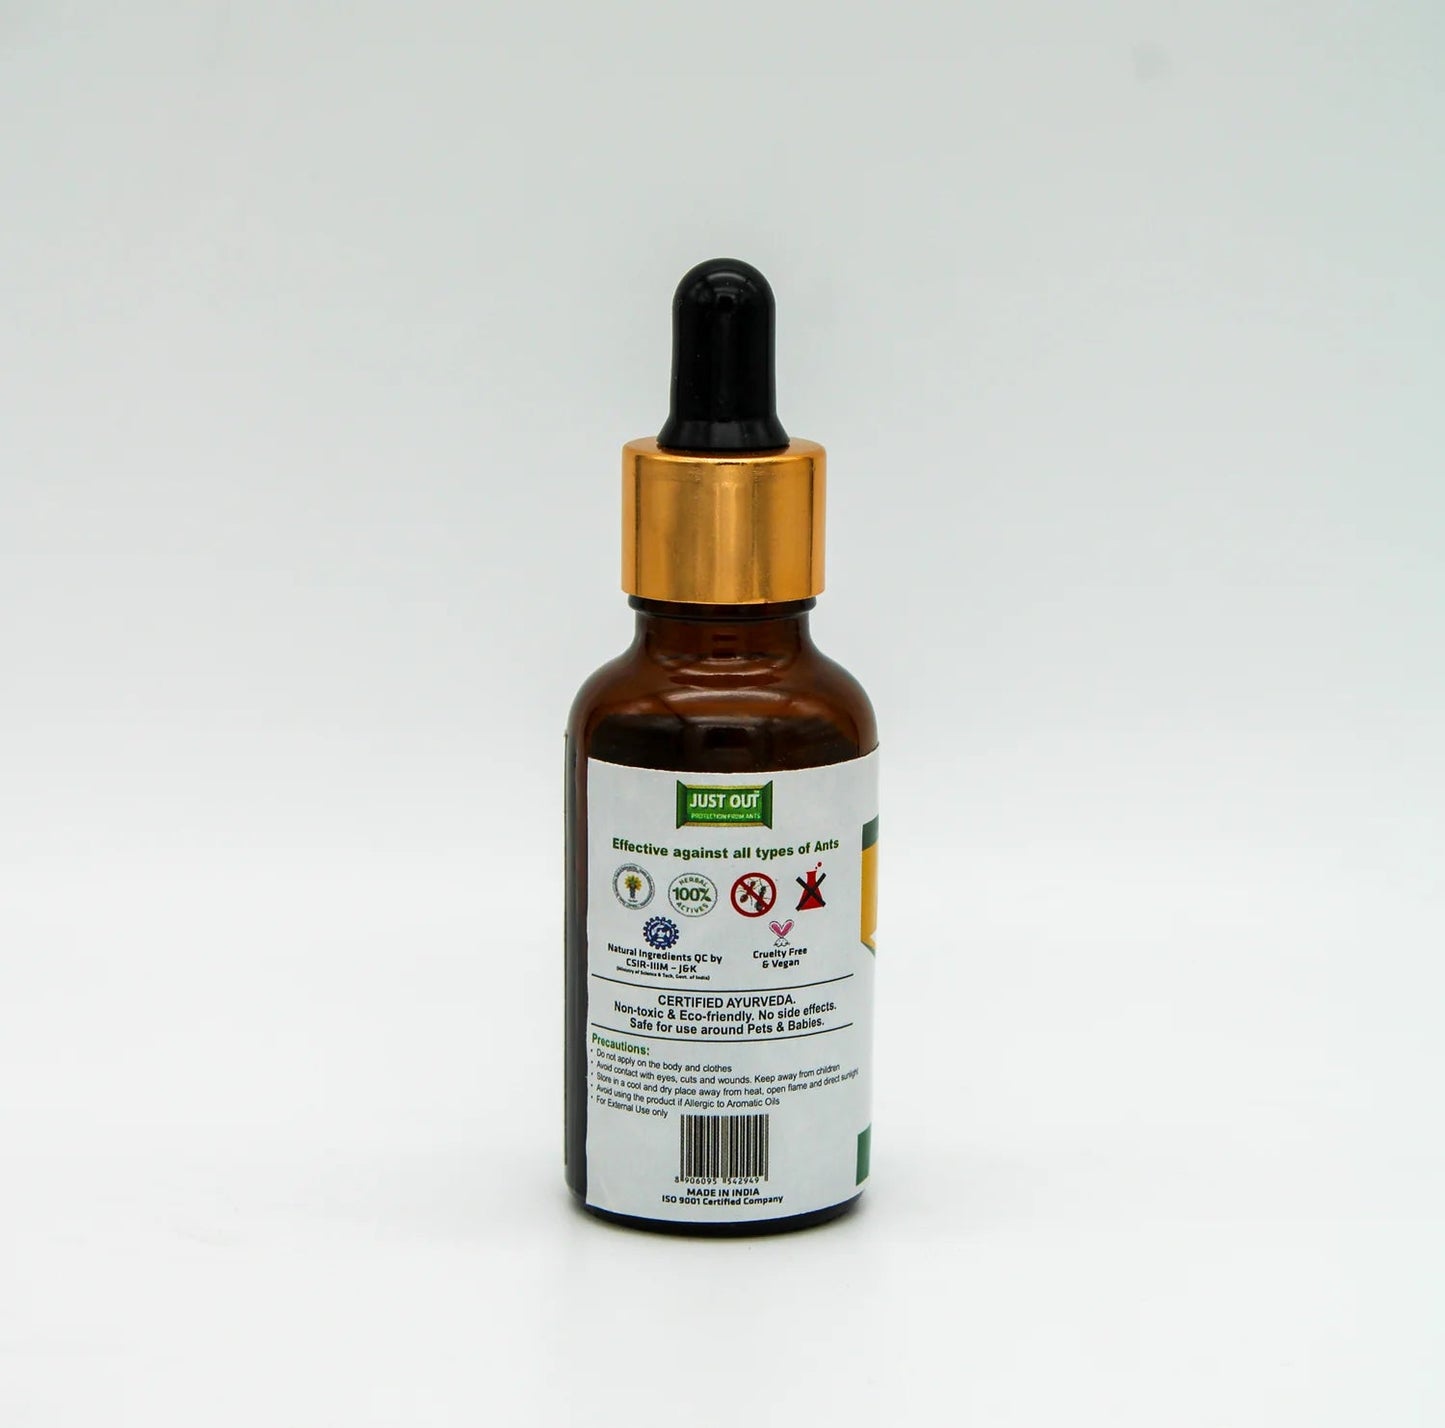 Herbal Strategi Ant Repellent Oil Gel 50 ML (Pack of 2 x 25 ml) | Certified Ayurveda (Ayush)| Non-Toxic & Eco Friendly, No Side Effects Repellent Herbal Strategi